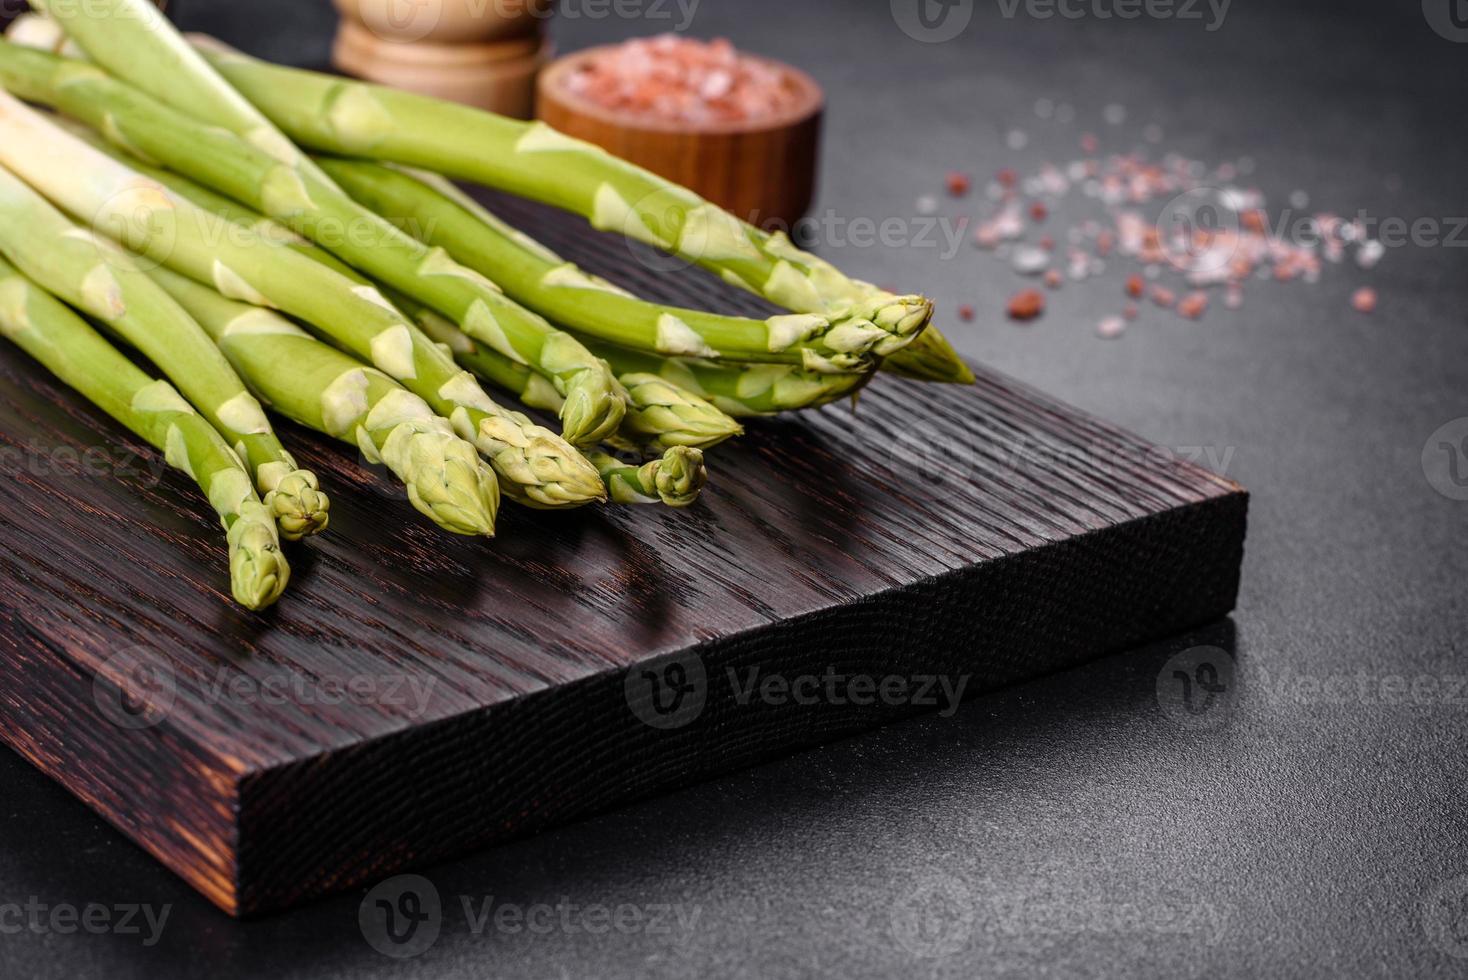 mazzetto di verdure biologiche di asparagi verdi maturi freschi pronti da cucinare o grigliare foto